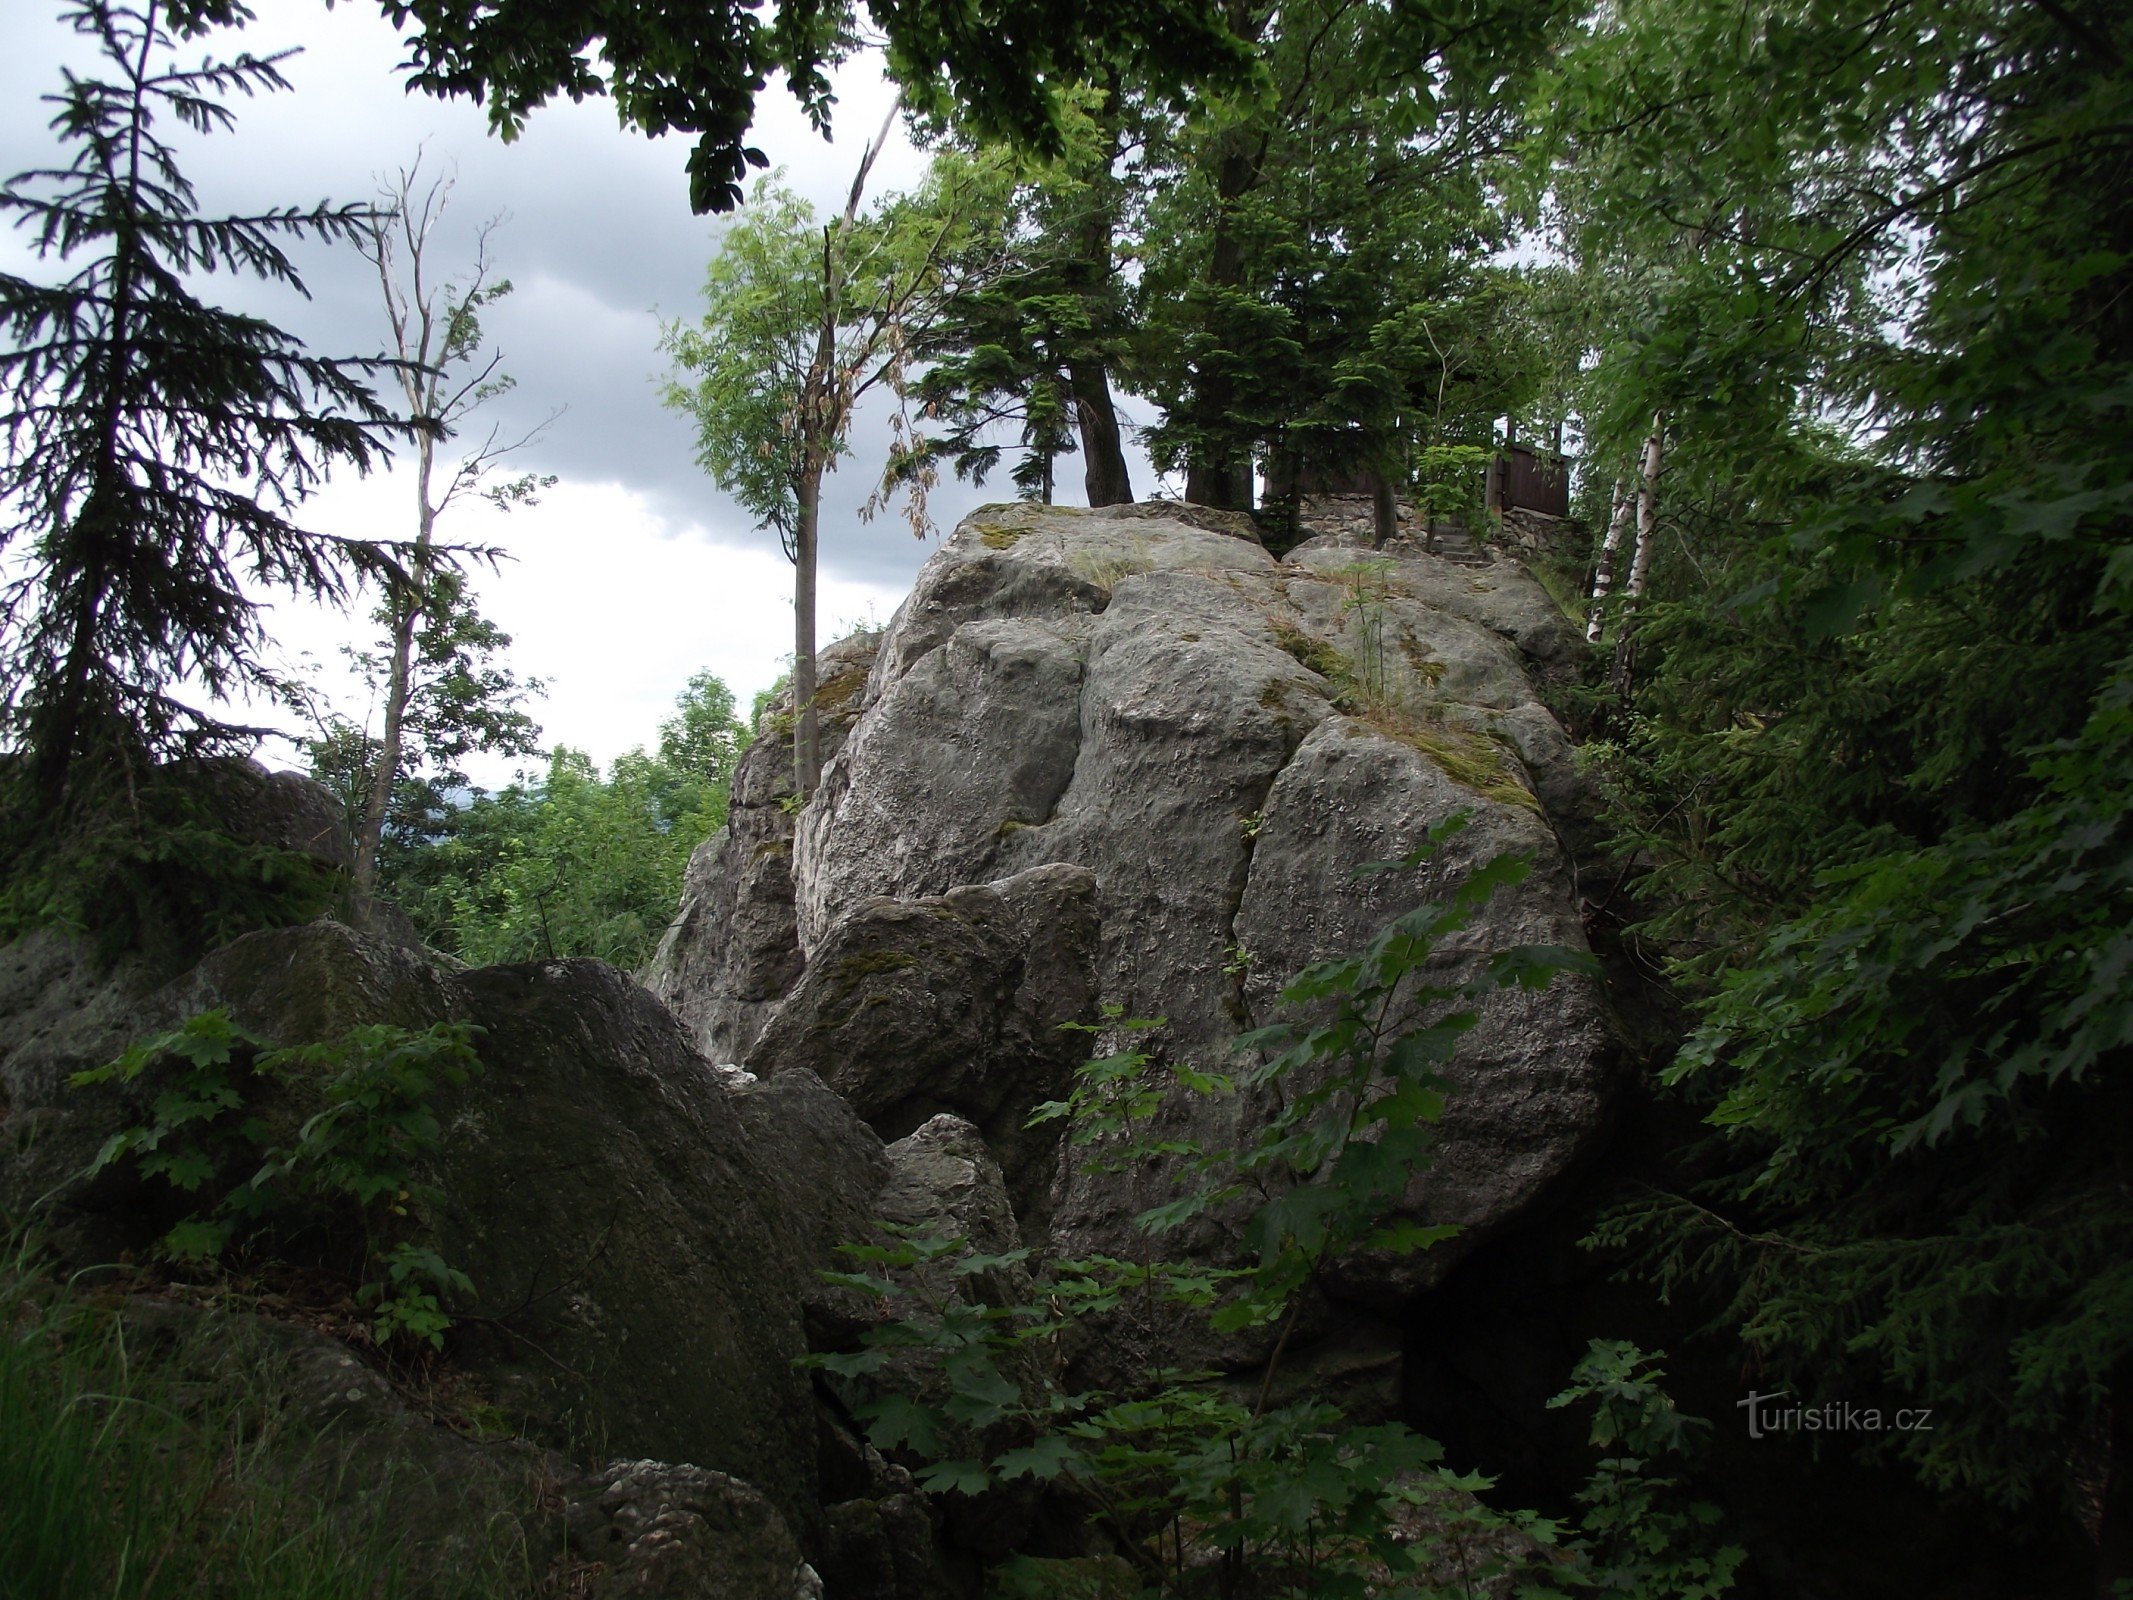 Šumperk / Bratrušov - Βράχοι πόλης ή τρία σε ένα (βράχια, επιφυλακή και κορυφή)